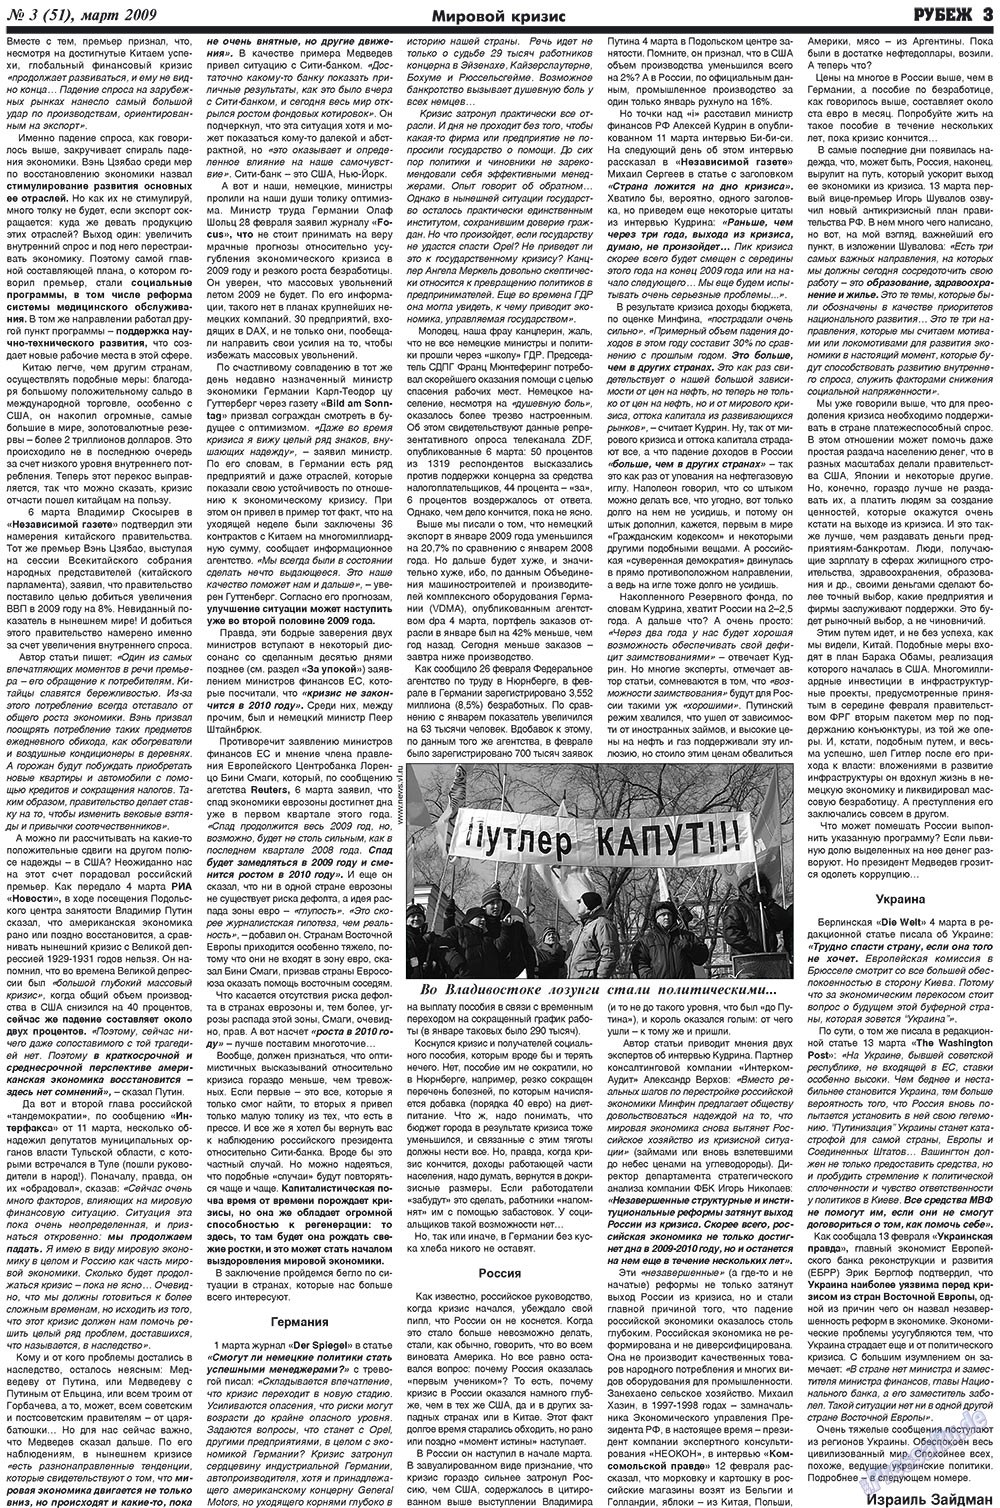 Рубеж, газета. 2009 №3 стр.3